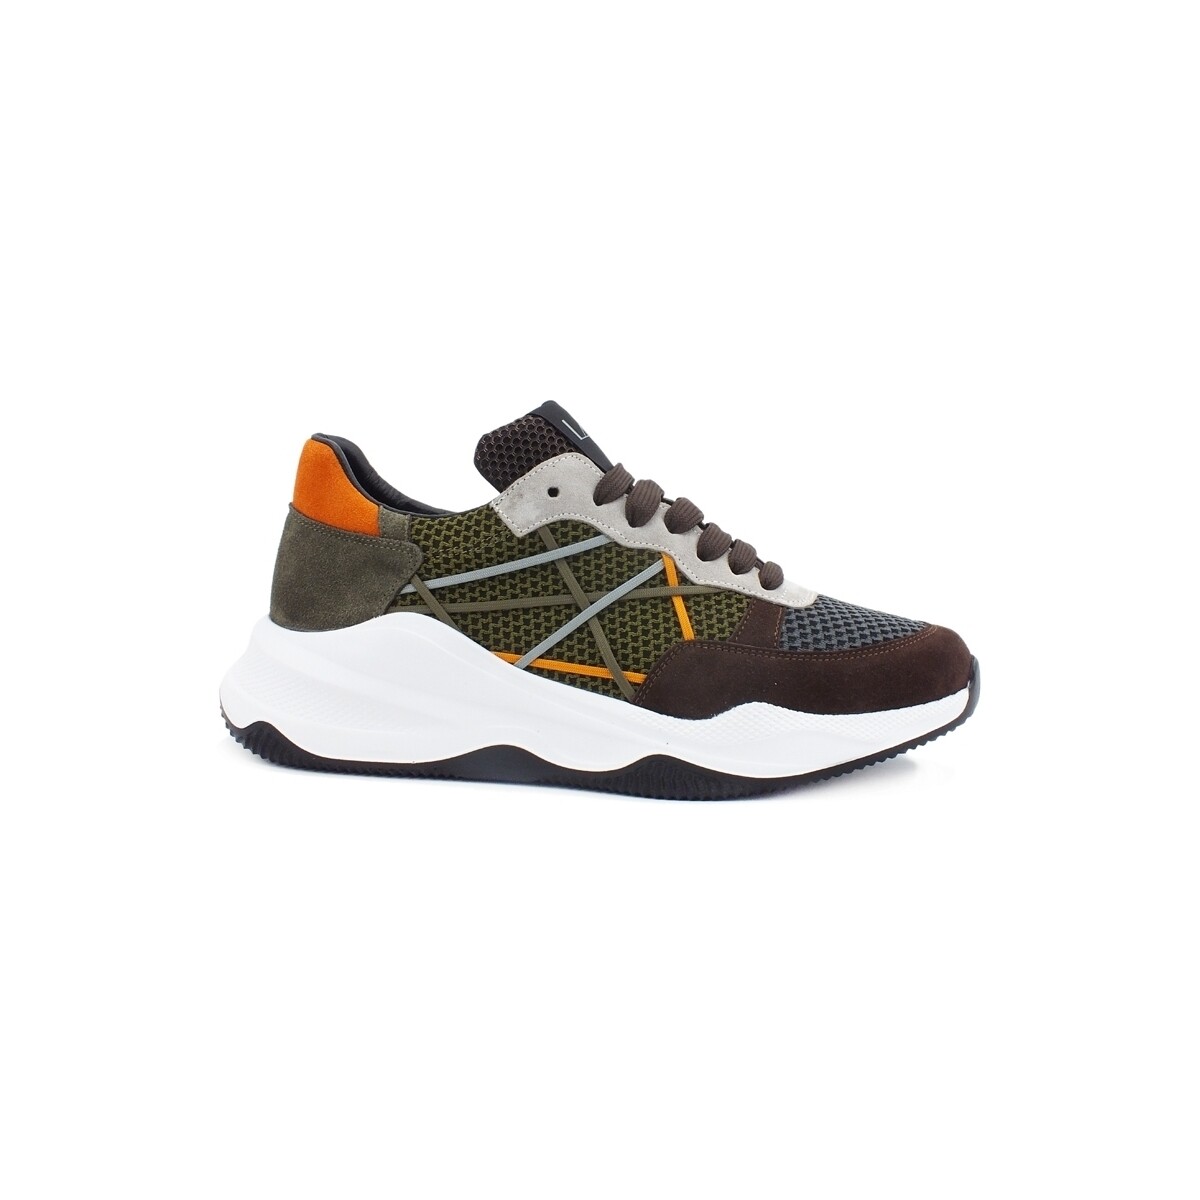 Chaussures Homme Multisport L4k3 LAKE Mr. Big Golden Sneaker Running Brown C44-GOL Marron